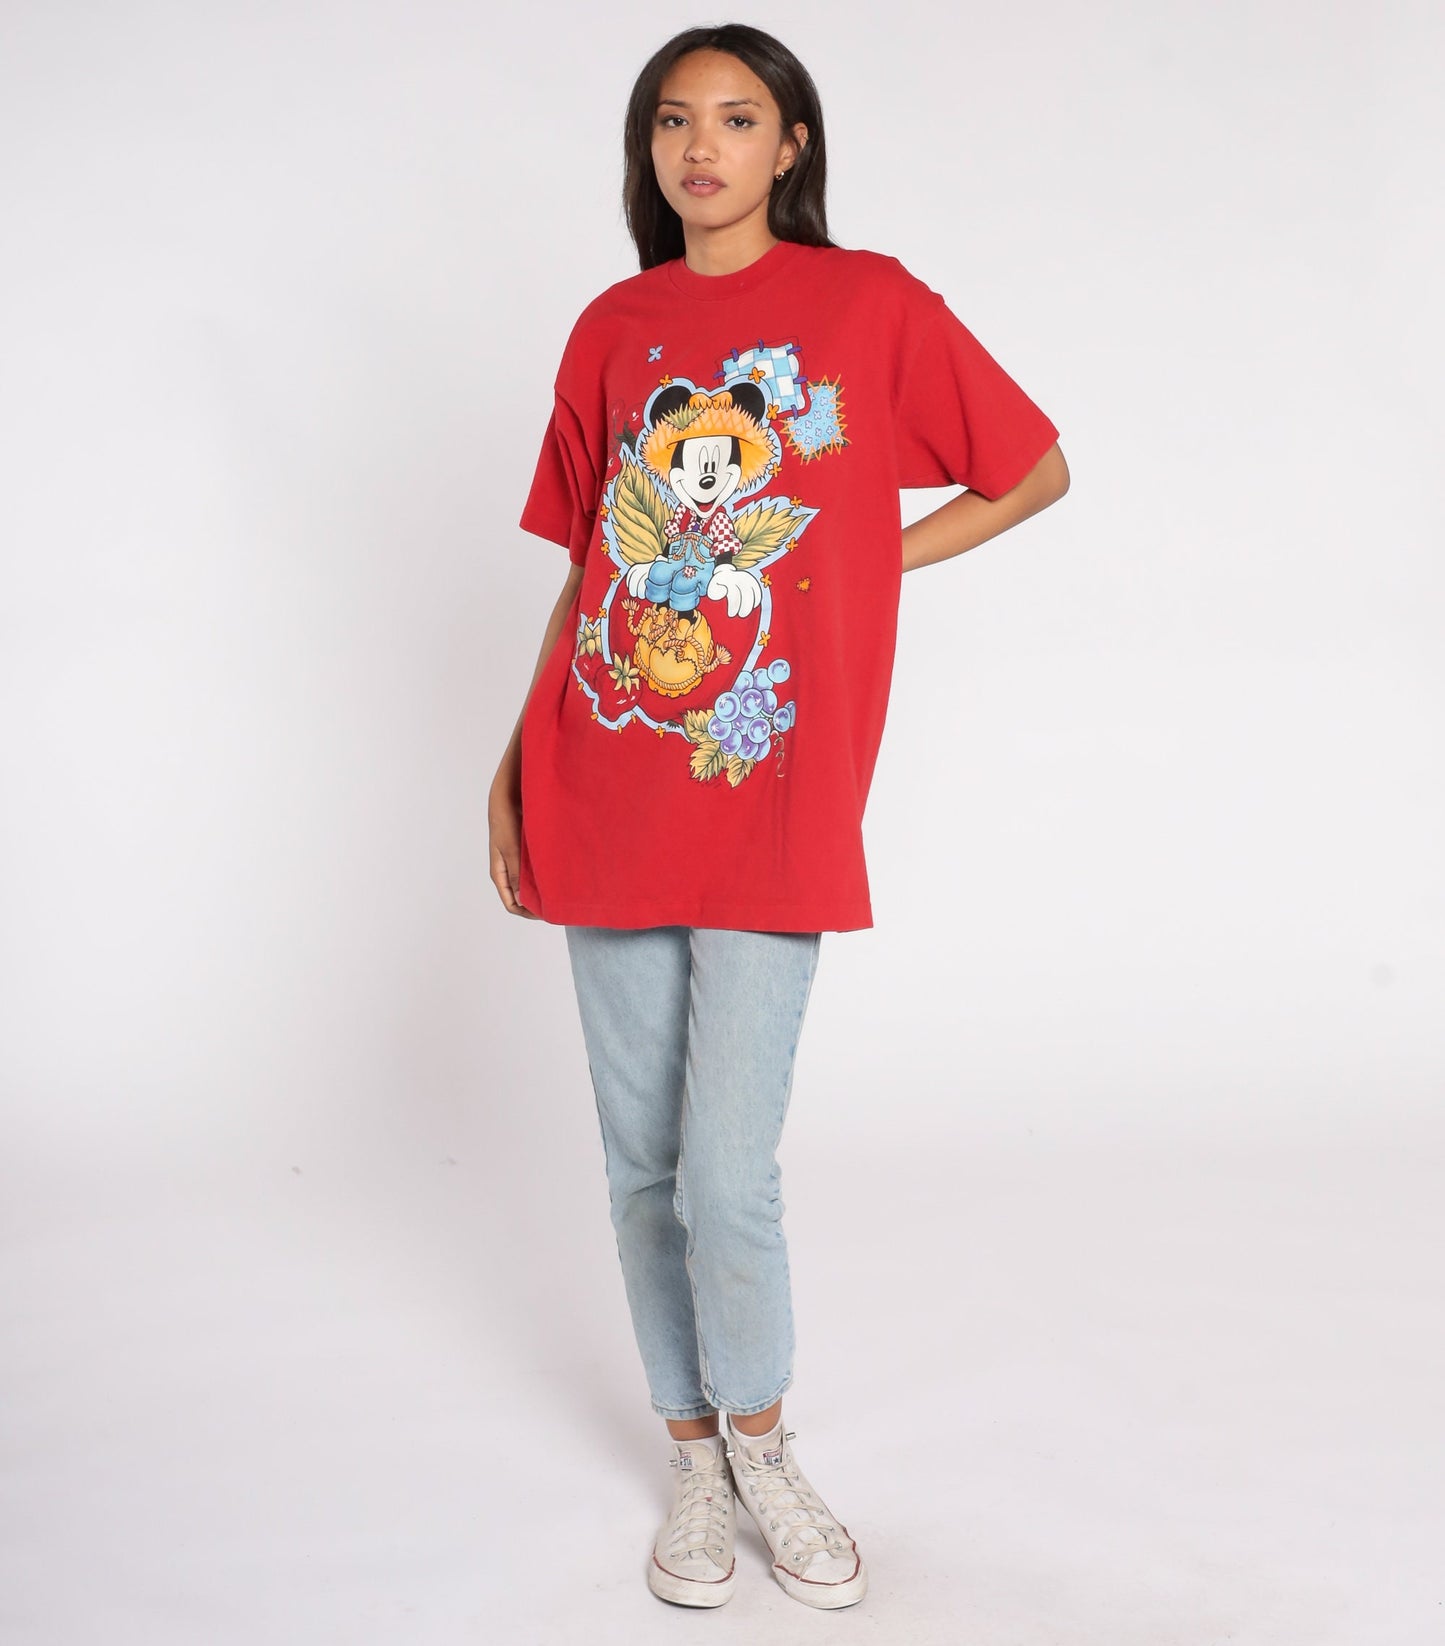 90s Mickey Mouse TShirt -- Farmer Walt Disney Shirt 1990s Country Fruit Graphic Cartoon T Shirt Vintage Retro Tee Red Shirt Extra Large xl